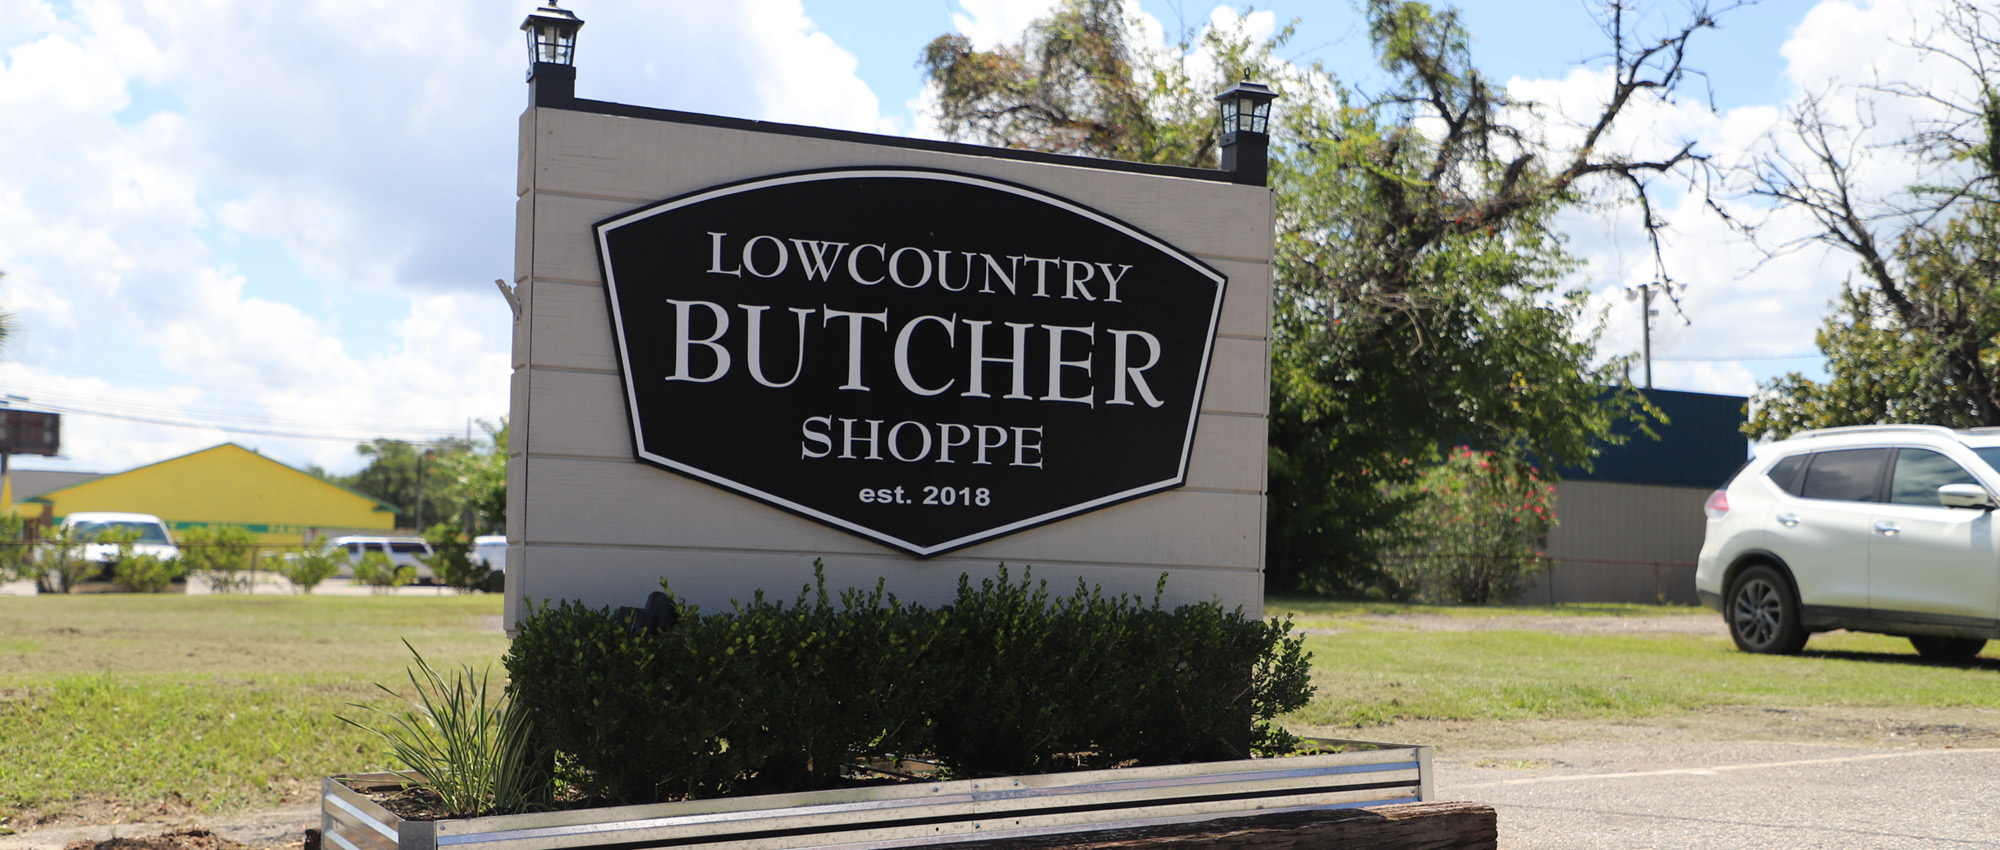 Lowcountry Butcher Shoppe